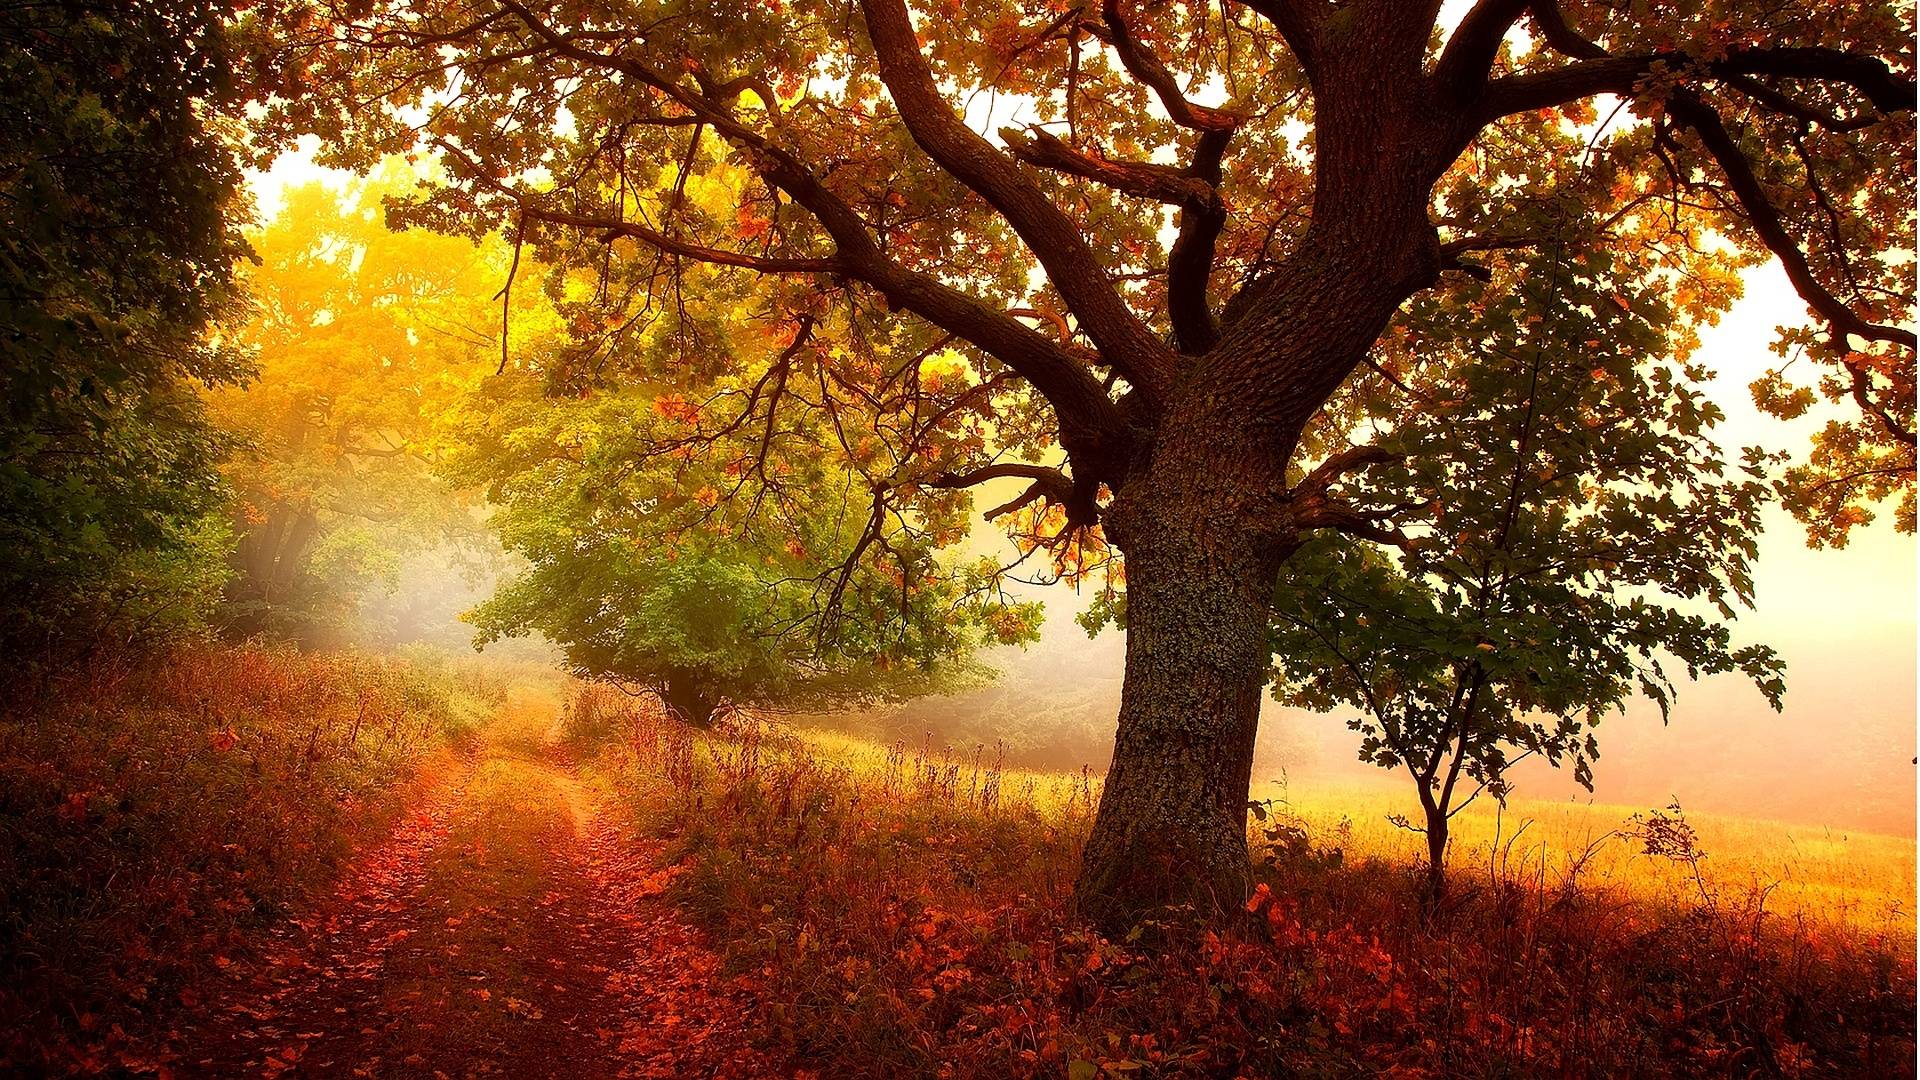 Nature in Autumn Wallpaper